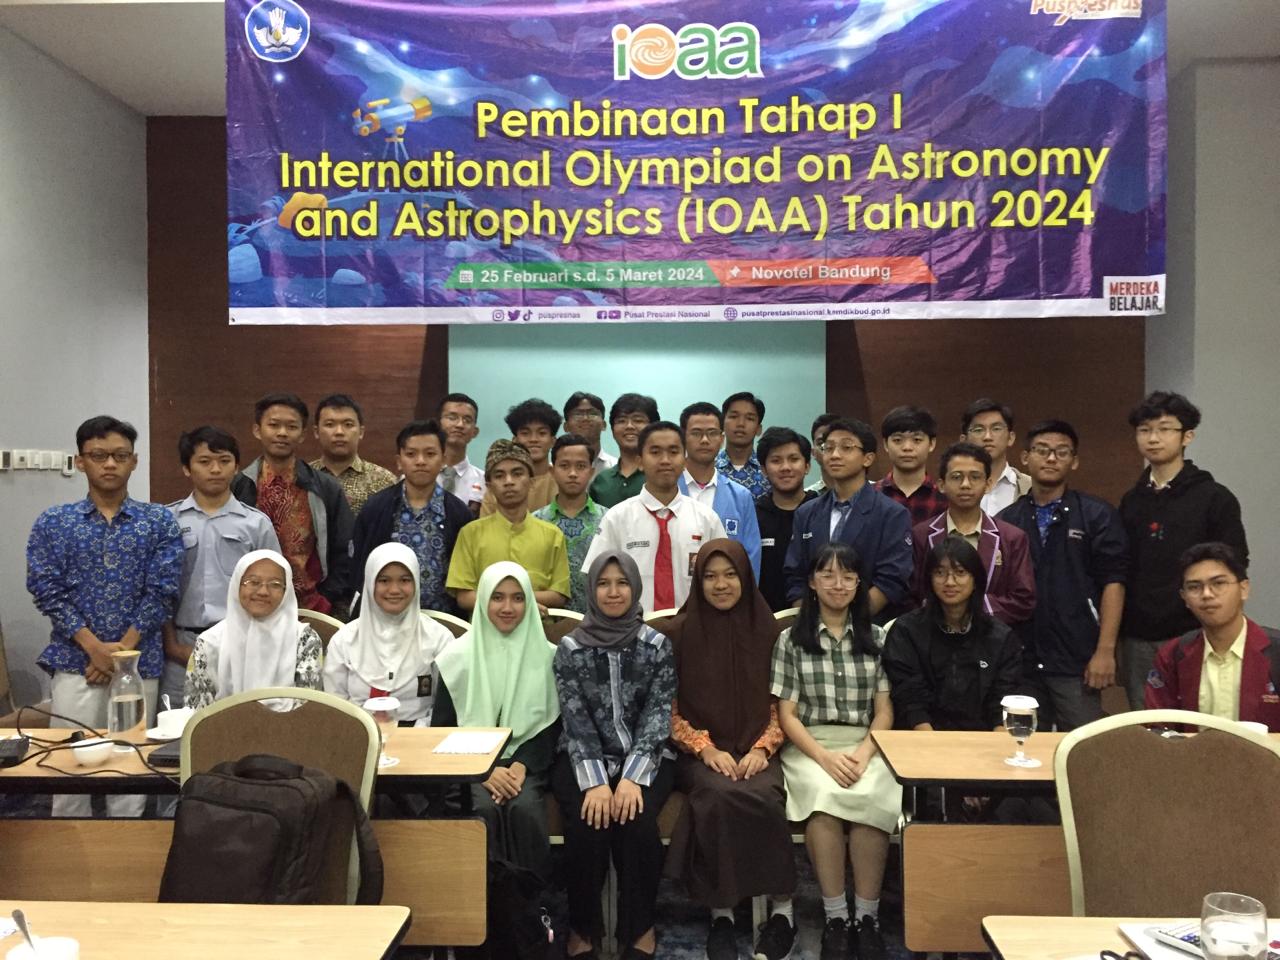 Siswa MAN IC Gorontalo Ikuti Pemusatan International Olympiad on Astronomy and Astrophysics di Novotel Bandung